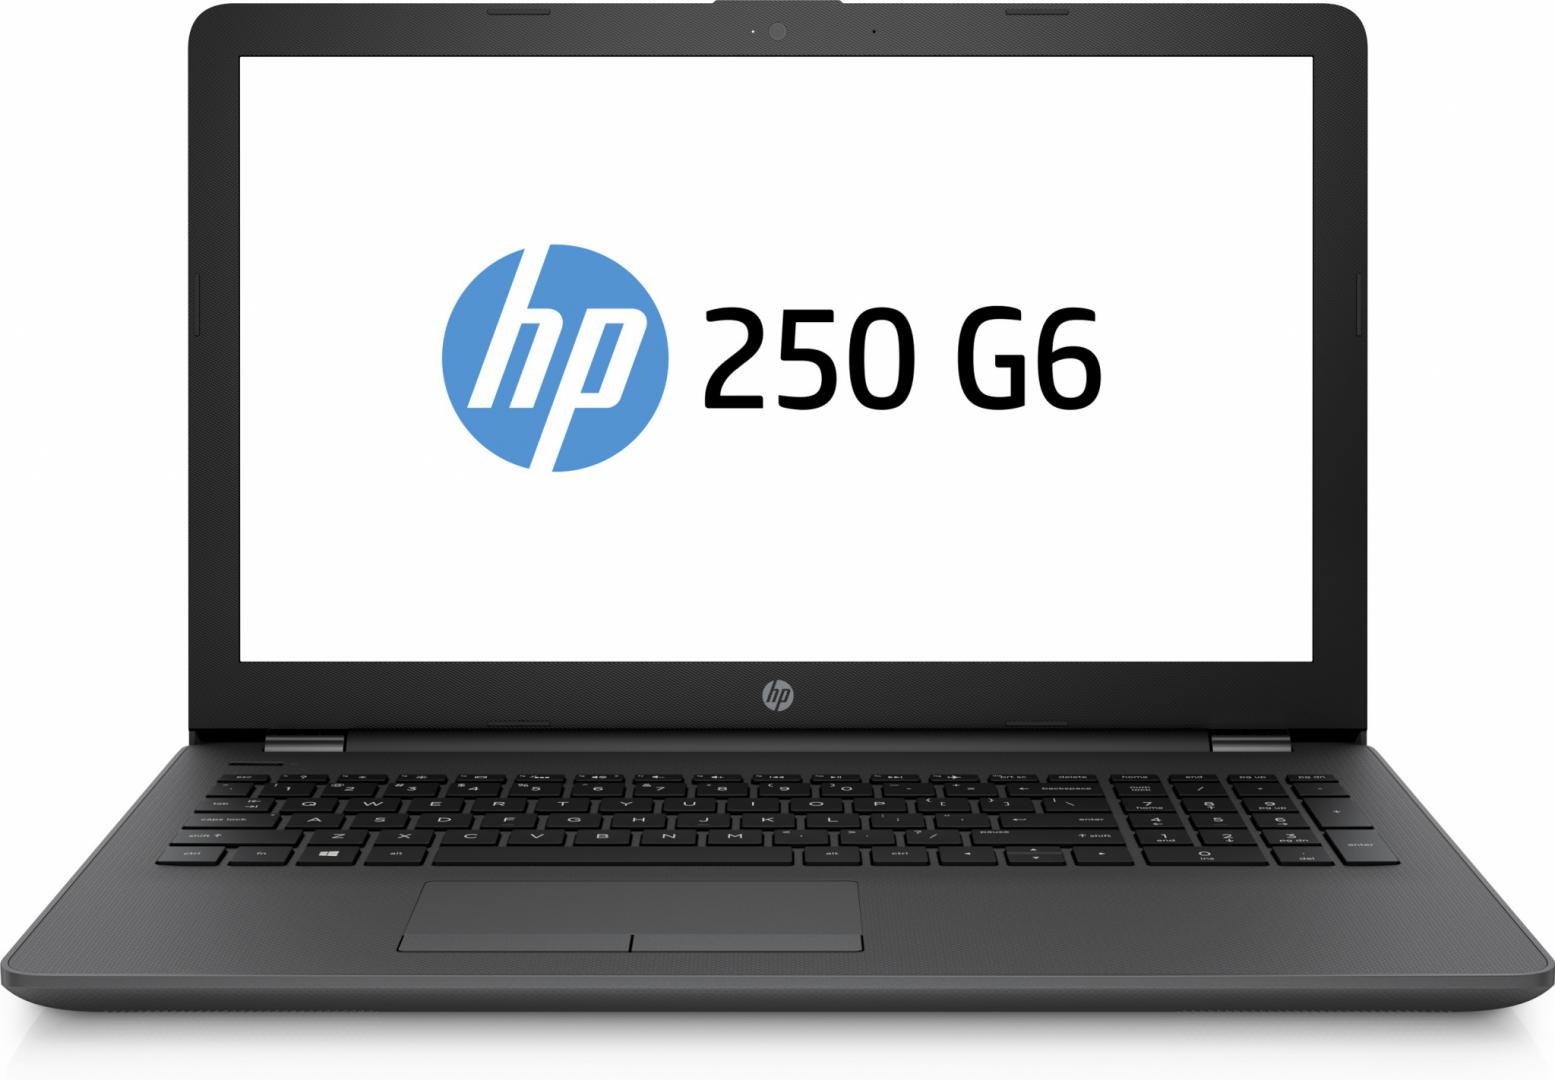 Laptop HP 250 G6 15.6" LED, Intel Pentium N4200, RAM 4GB, HDD 500GB, Free DOS